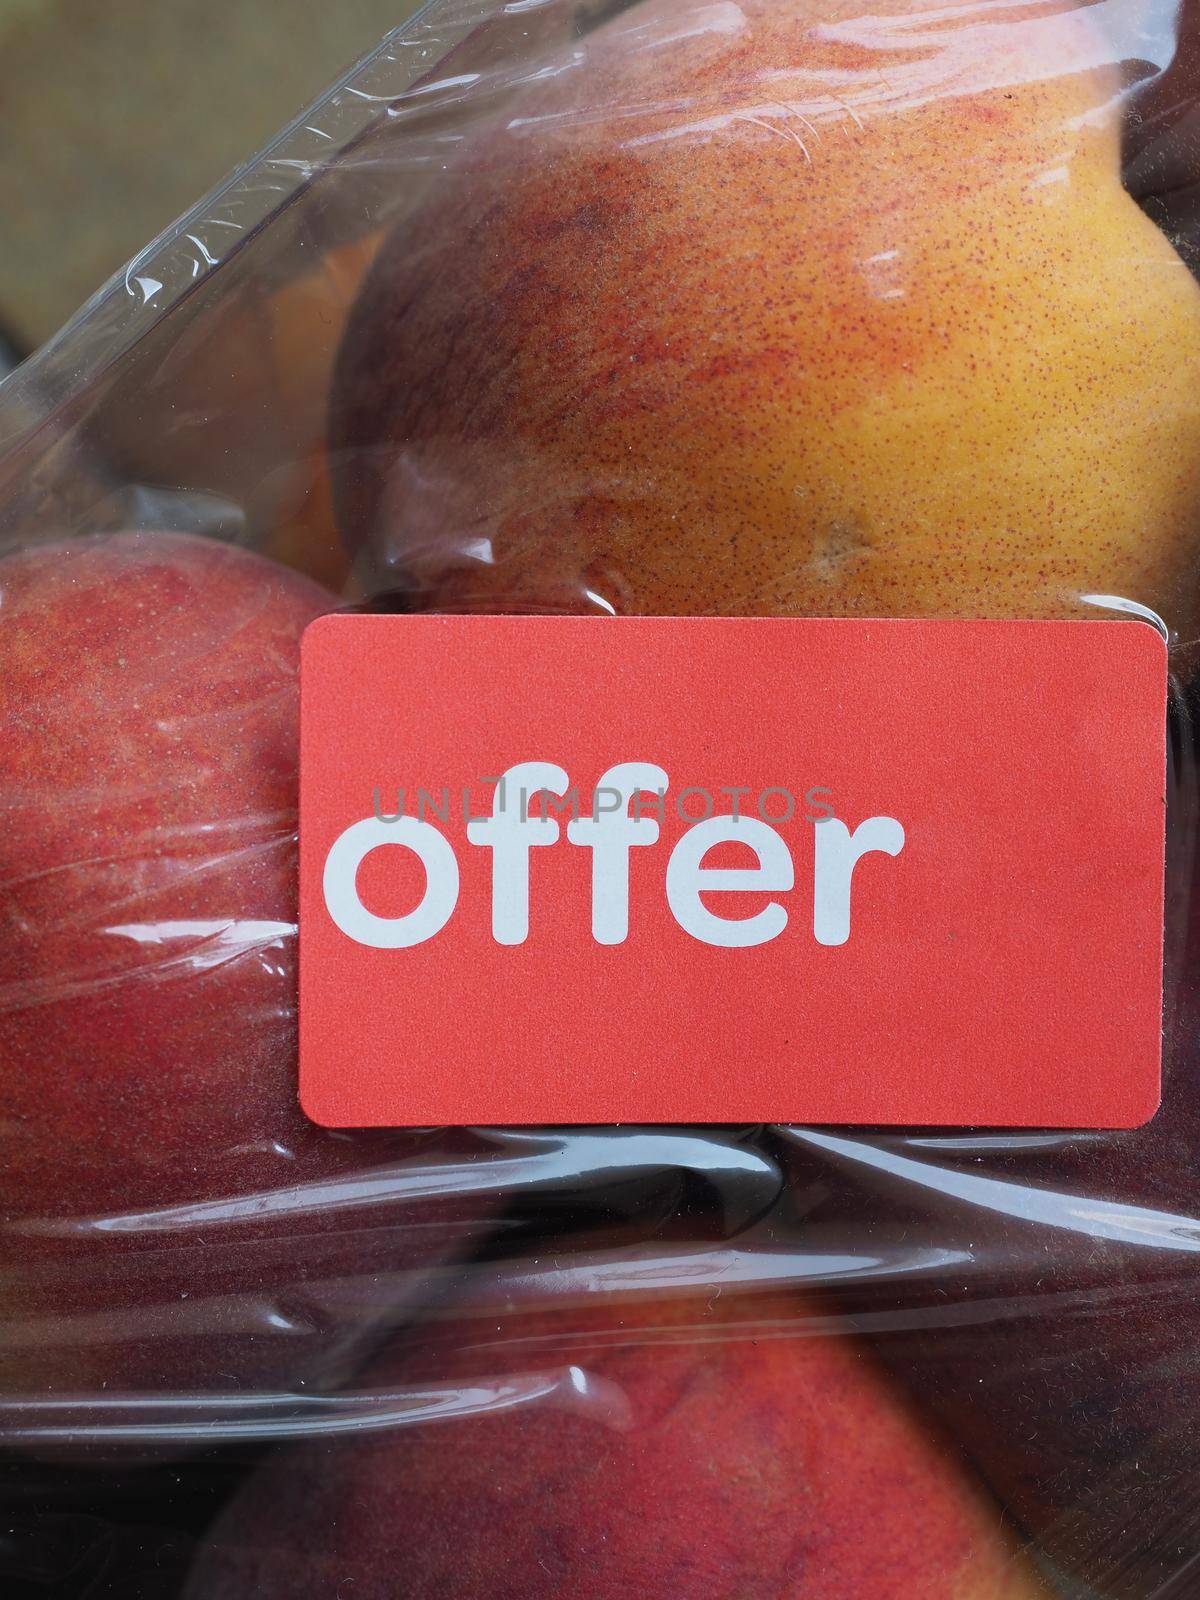 On offer label on packet of fruit